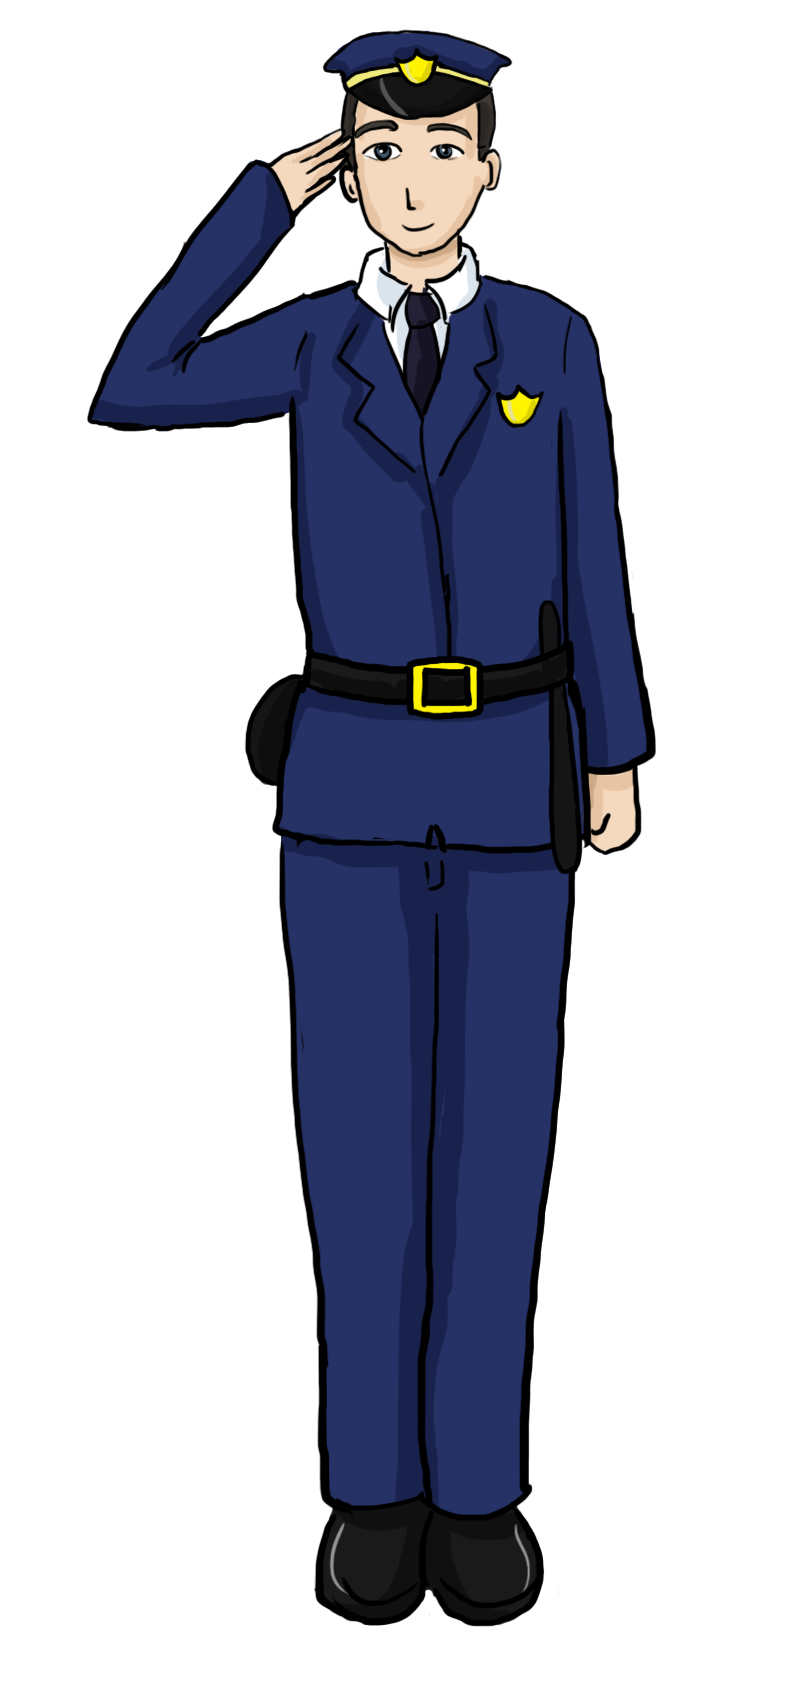 Clip Art Police Officer Uniform Clipart 